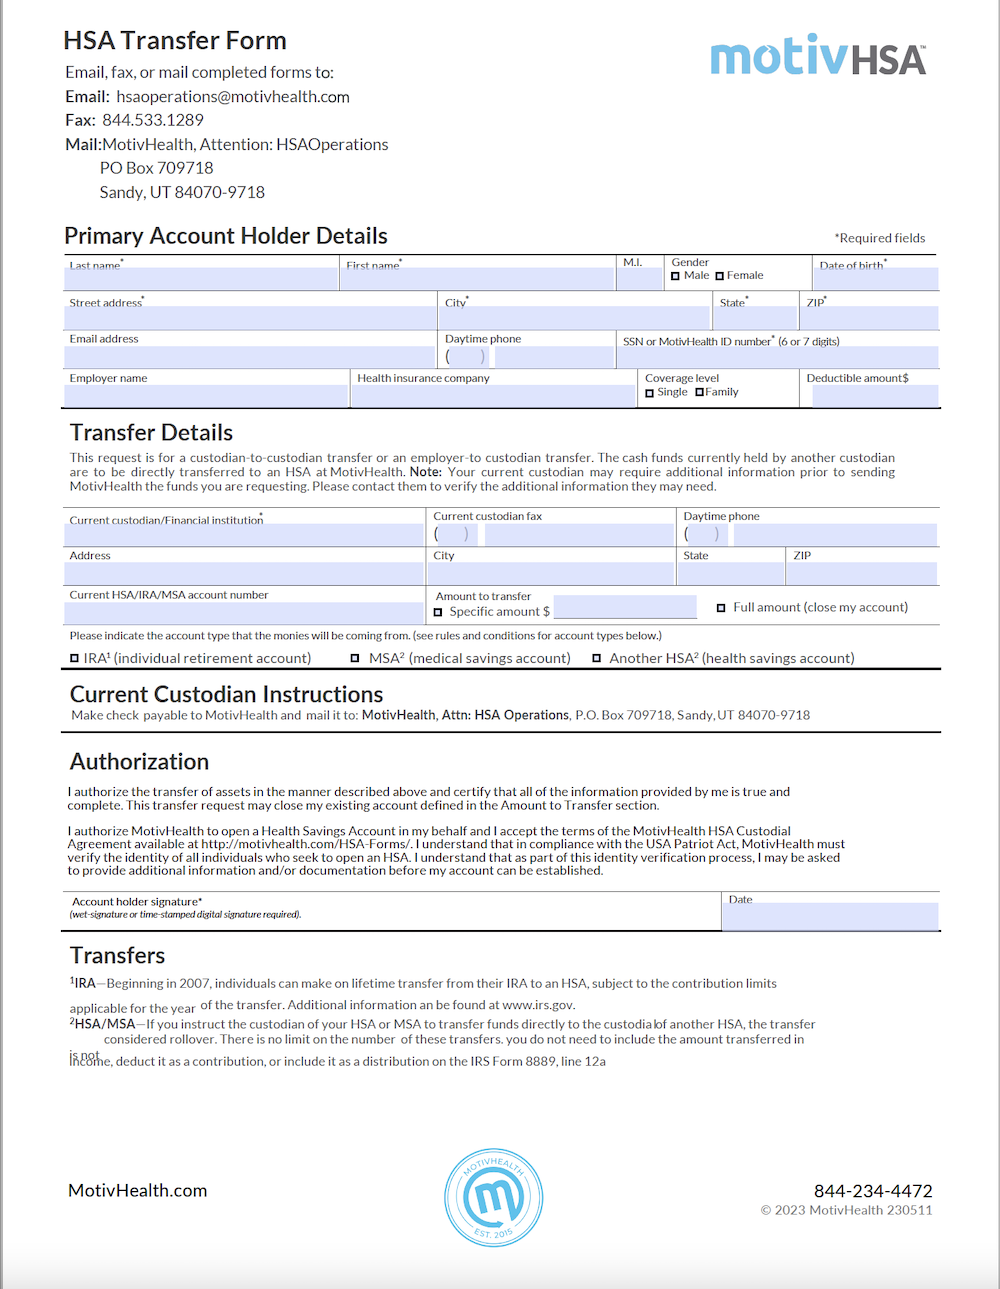 HSA Transfer Form